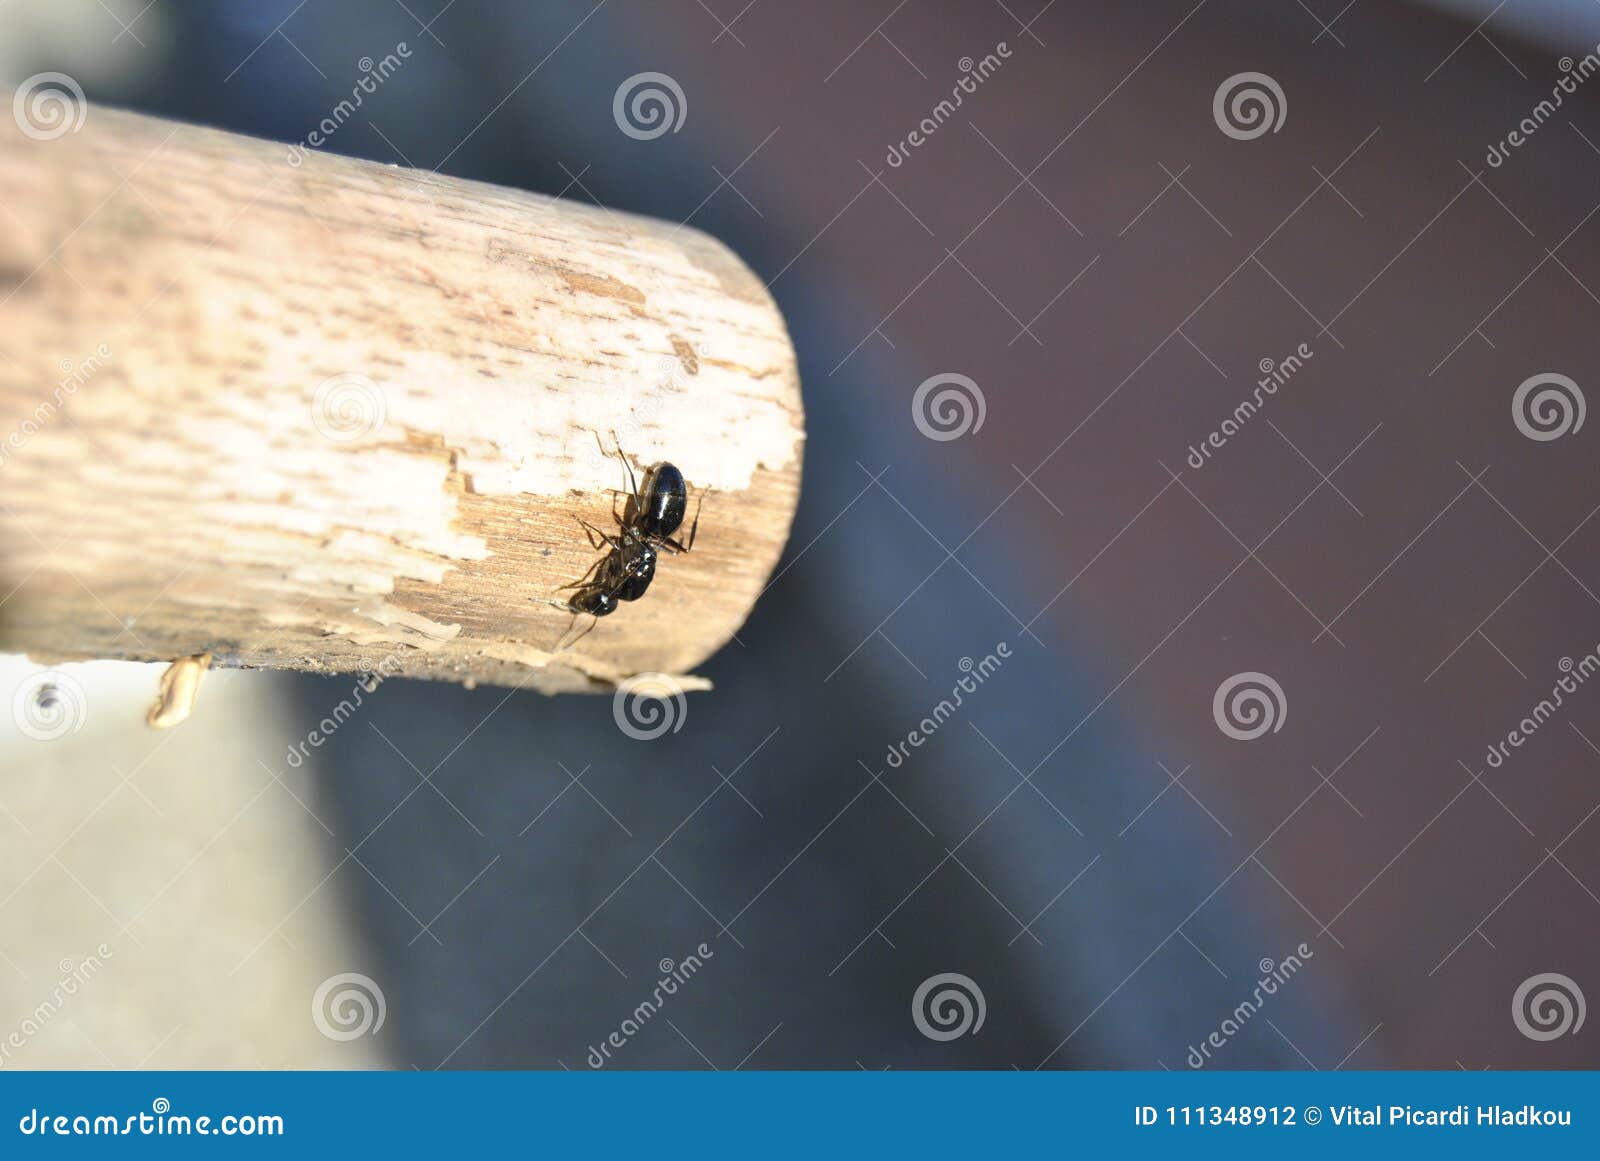 climbing ant on wood stick